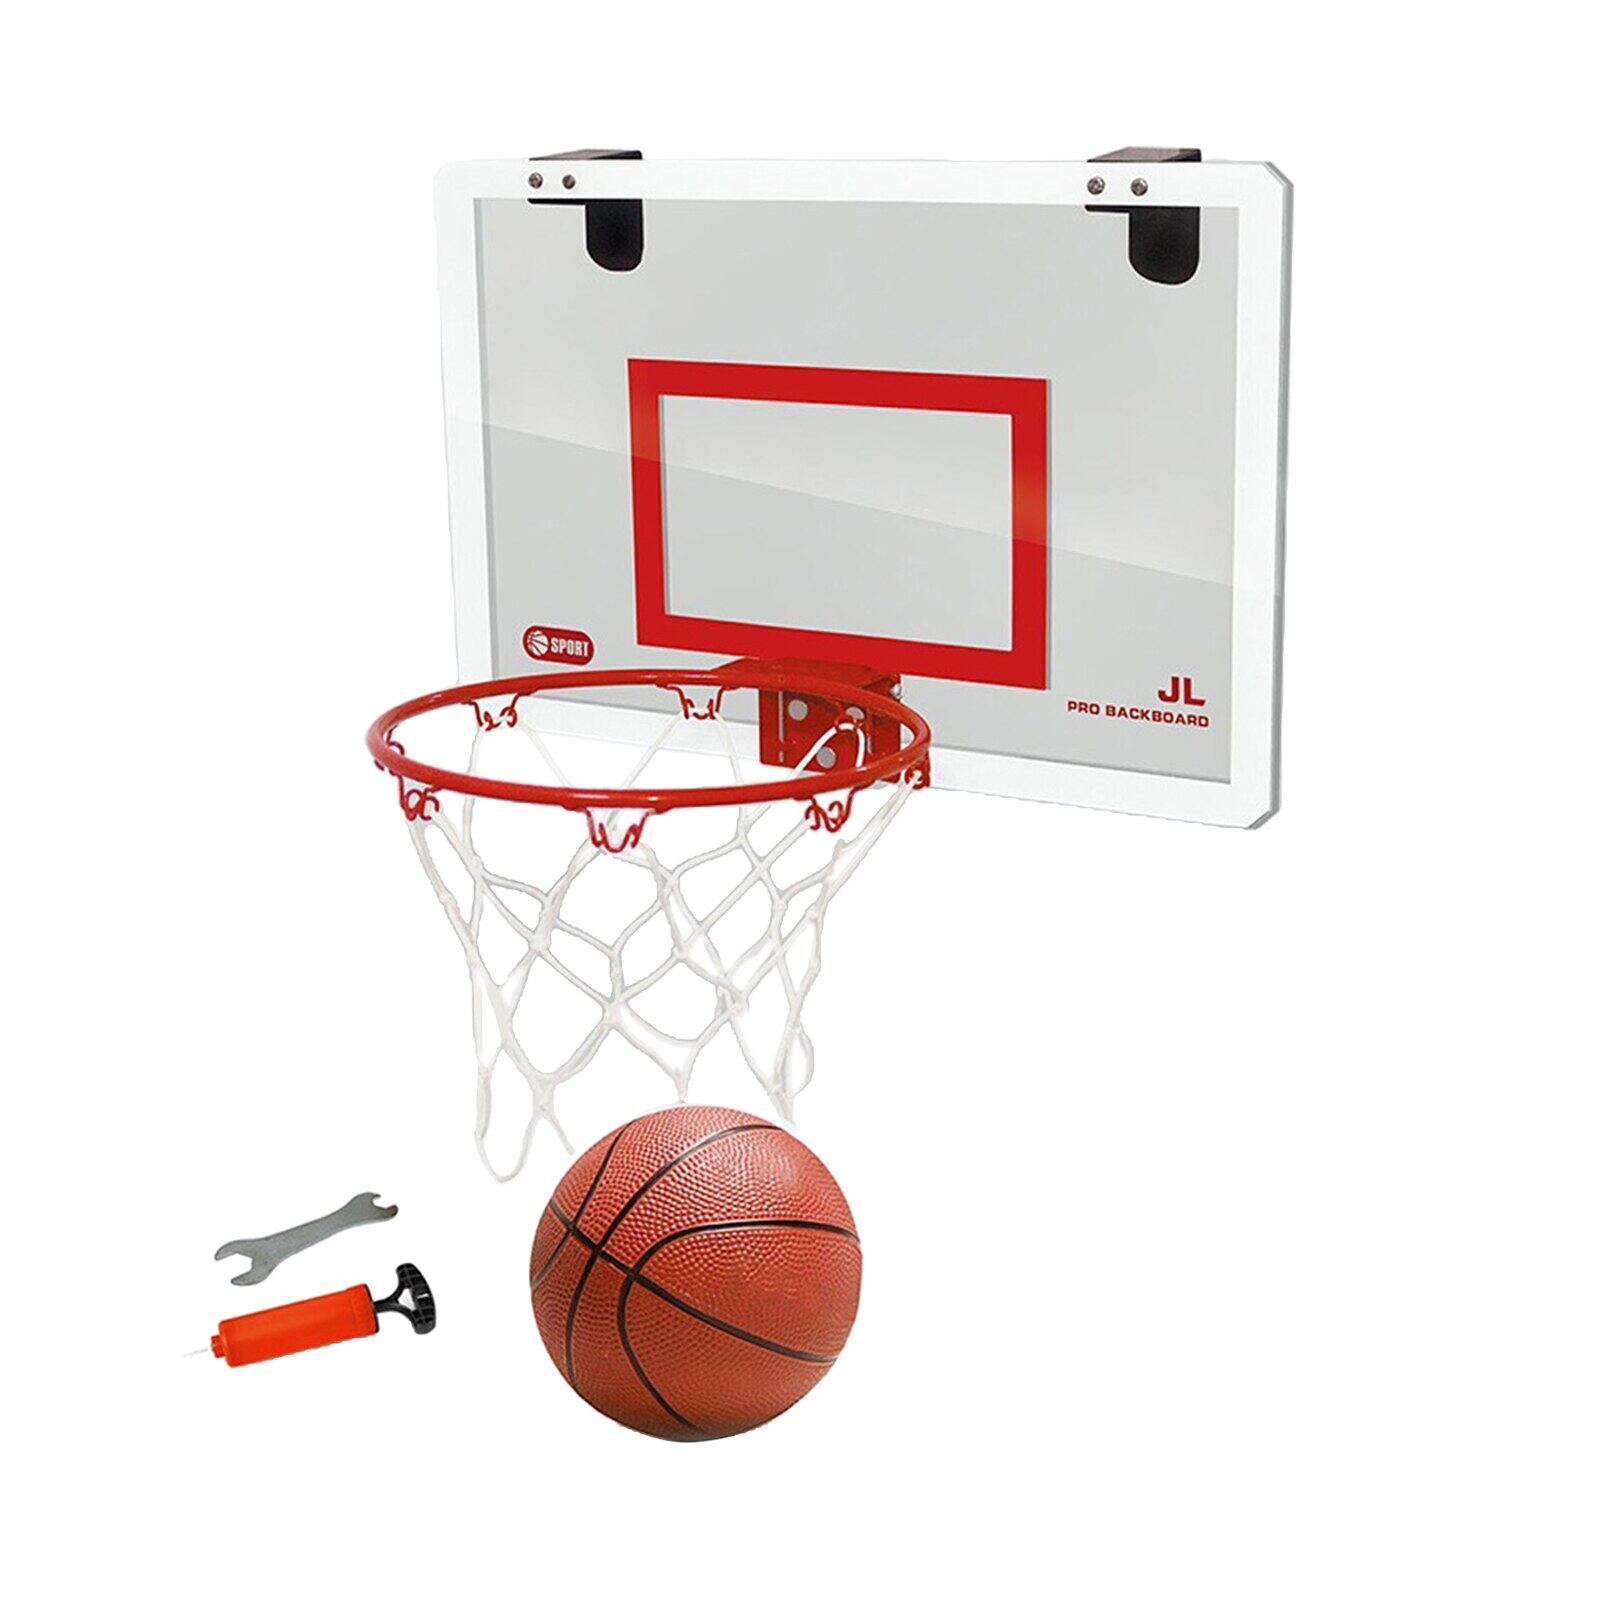 Portable Mini Basketball Hoop Accessories Garden Home Basketball Fans Sports